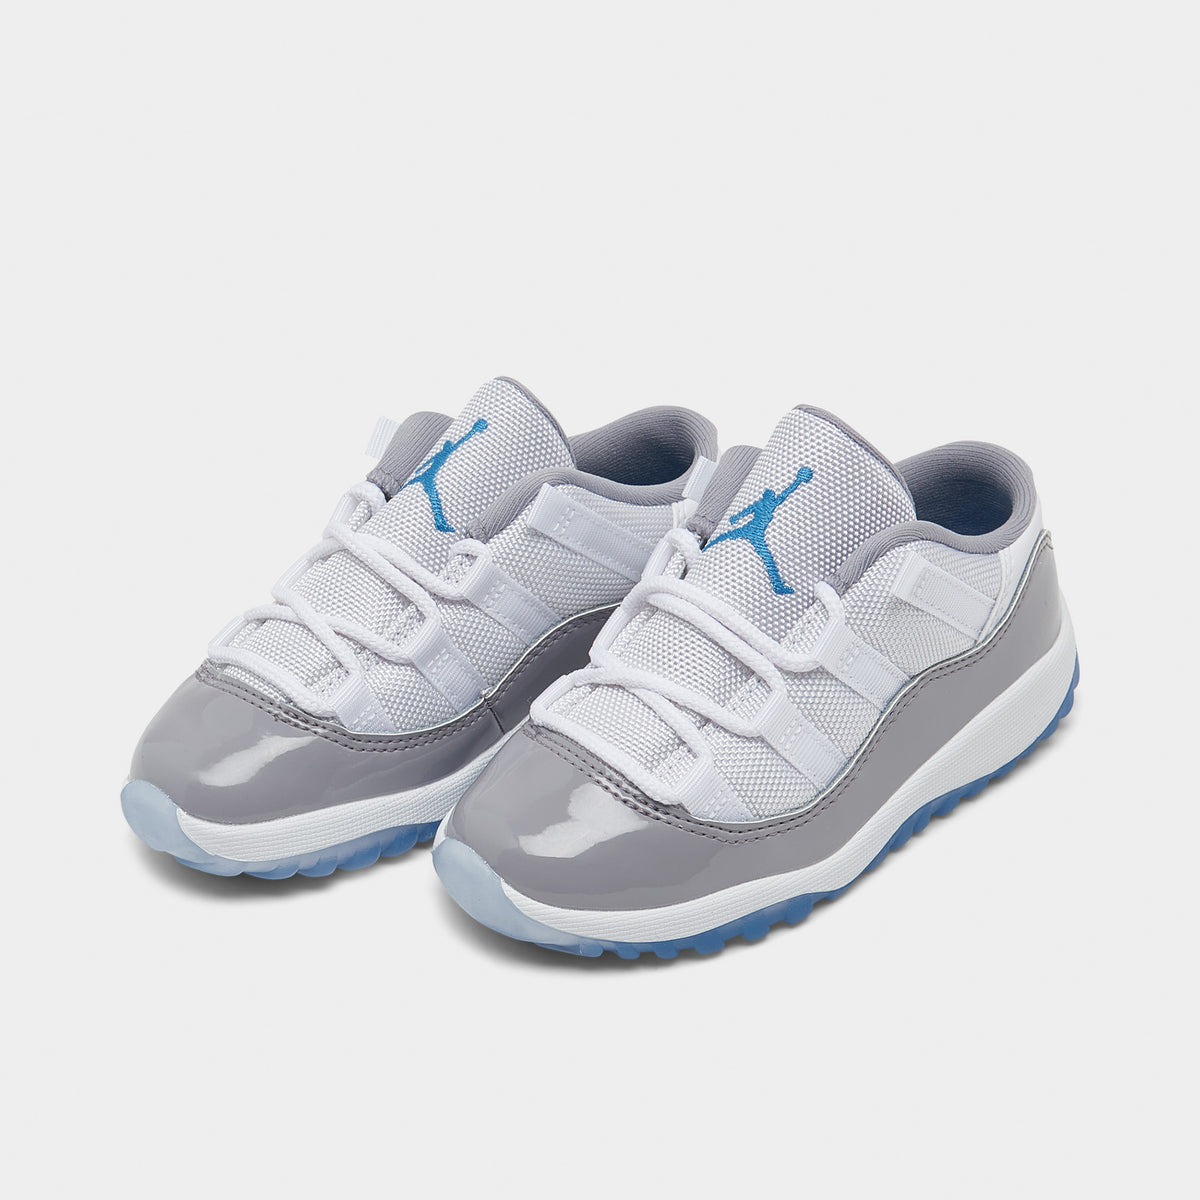 Jordan 11 Retro Low TD White / Cement Grey - University Blue | JD